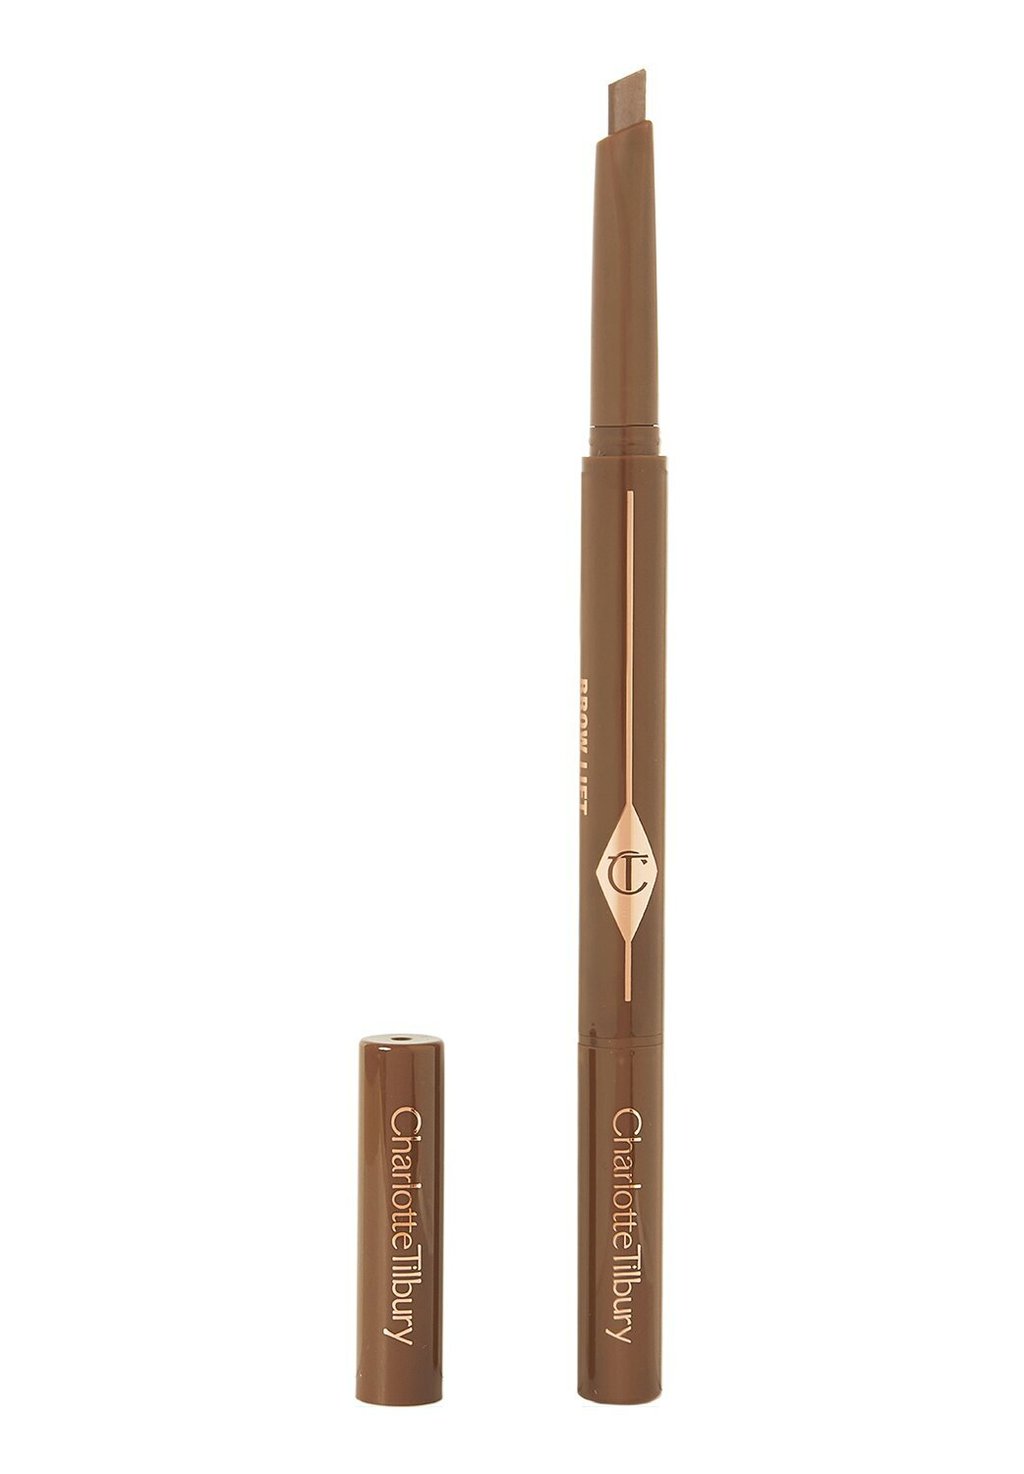 Карандаш для бровей BROW LIFT Charlotte Tilbury, цвет soft brown карандаш для бровей charlotte tilbury brow lift оттенок natural brown